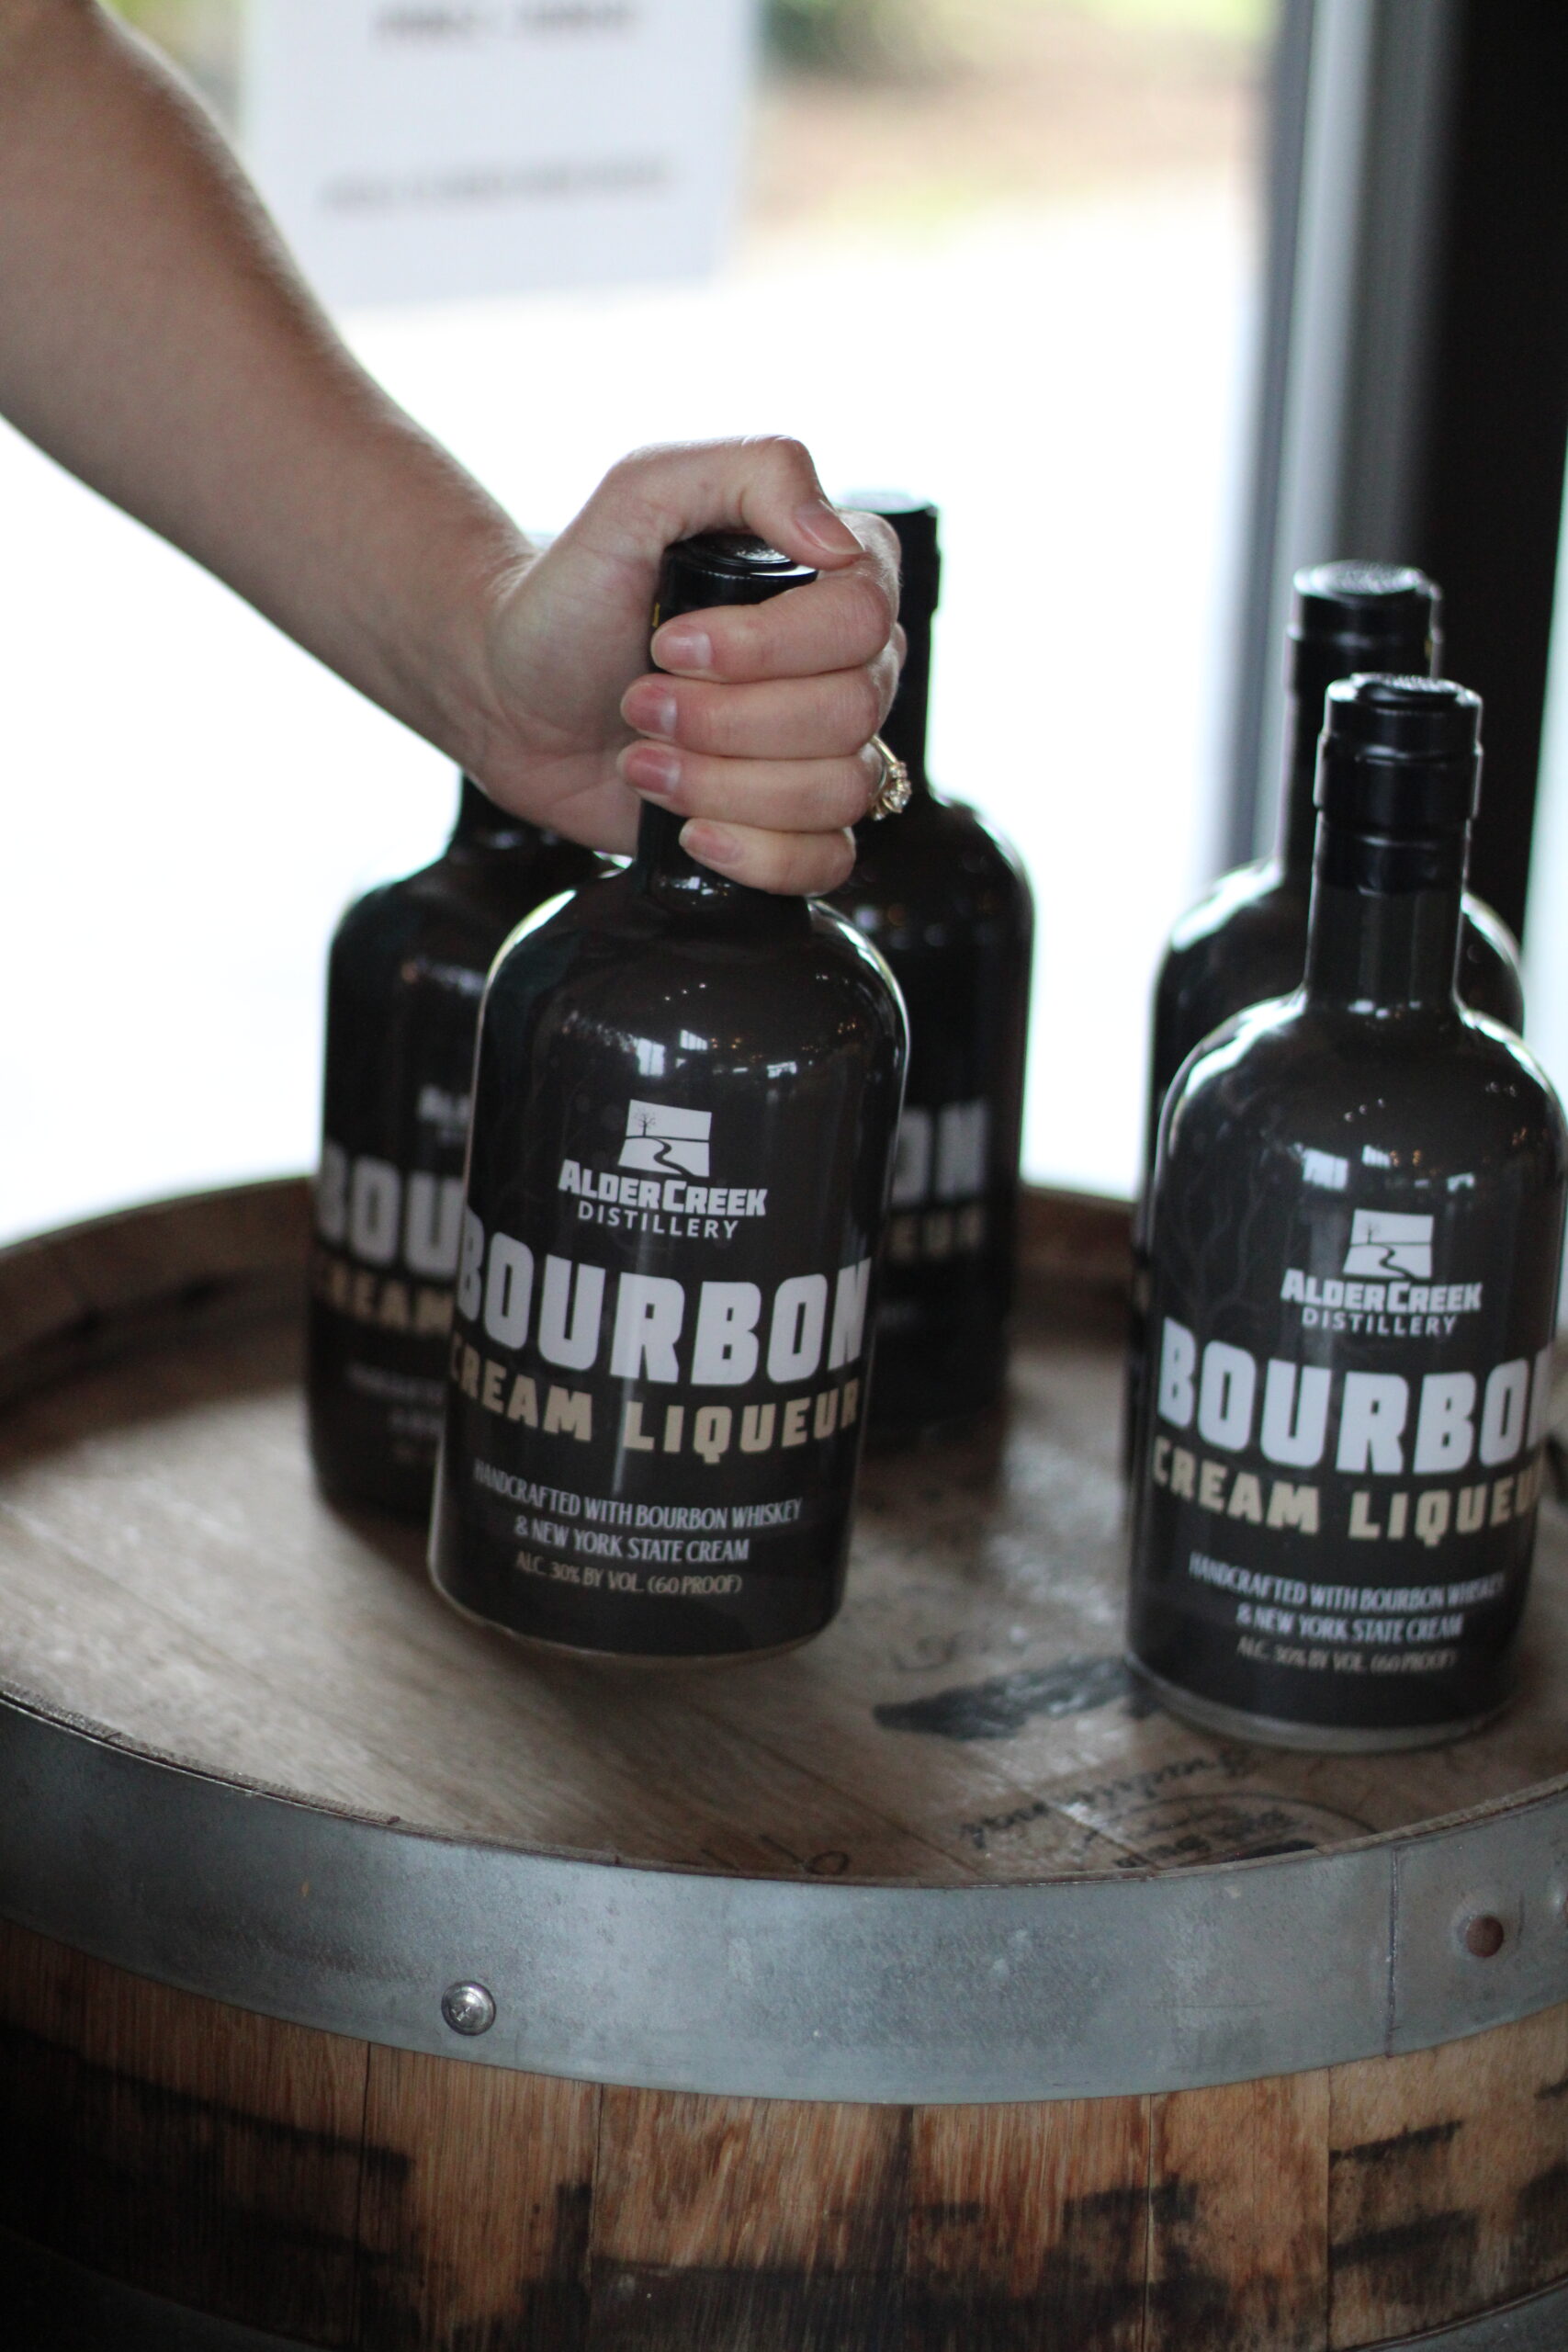 Bourbon Cream Liqueur